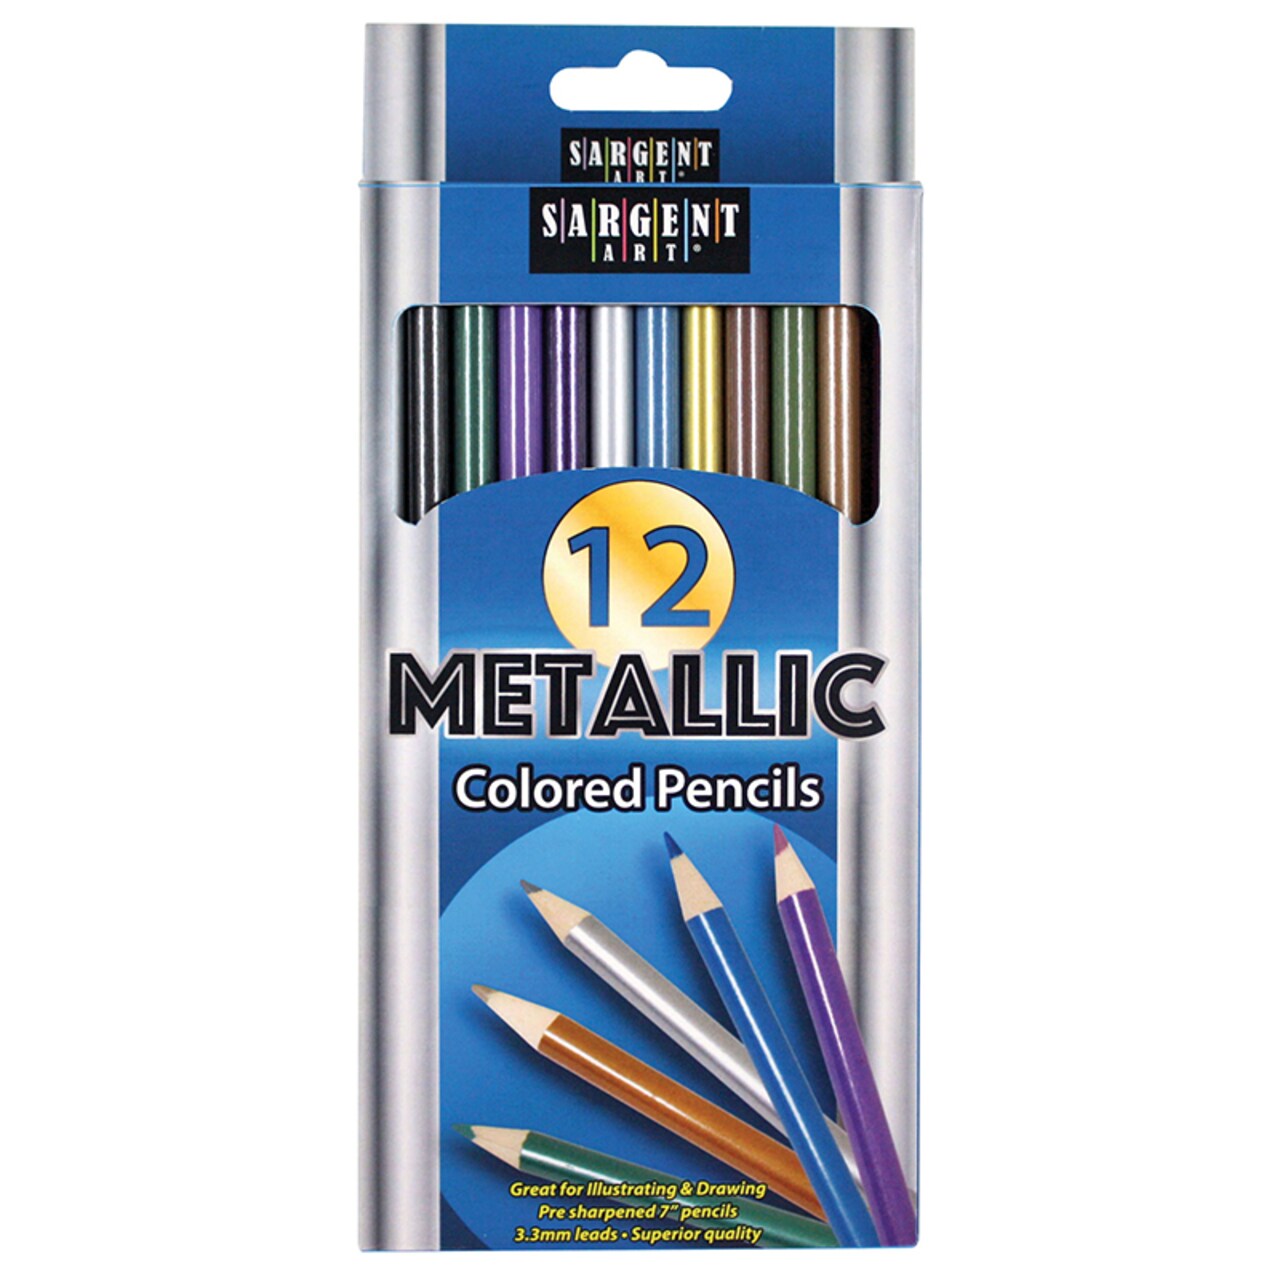 Colored Pencils, Metallic, 12 Colors